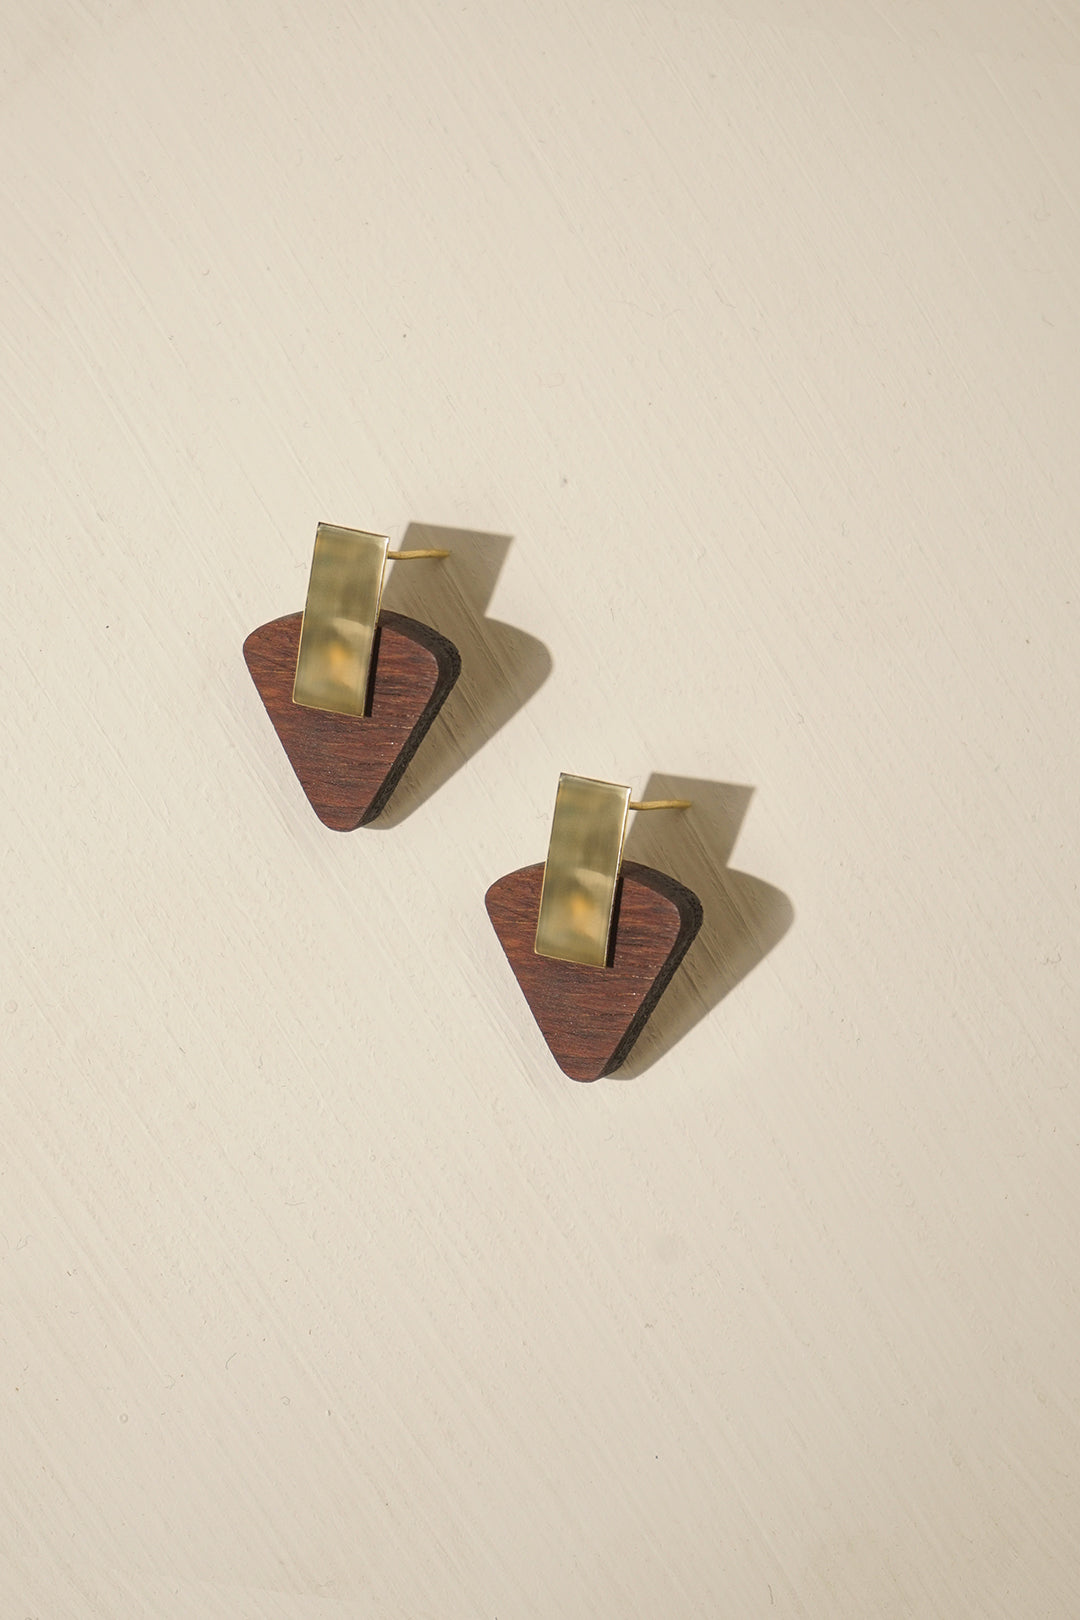 Triangular Wooden Earrings